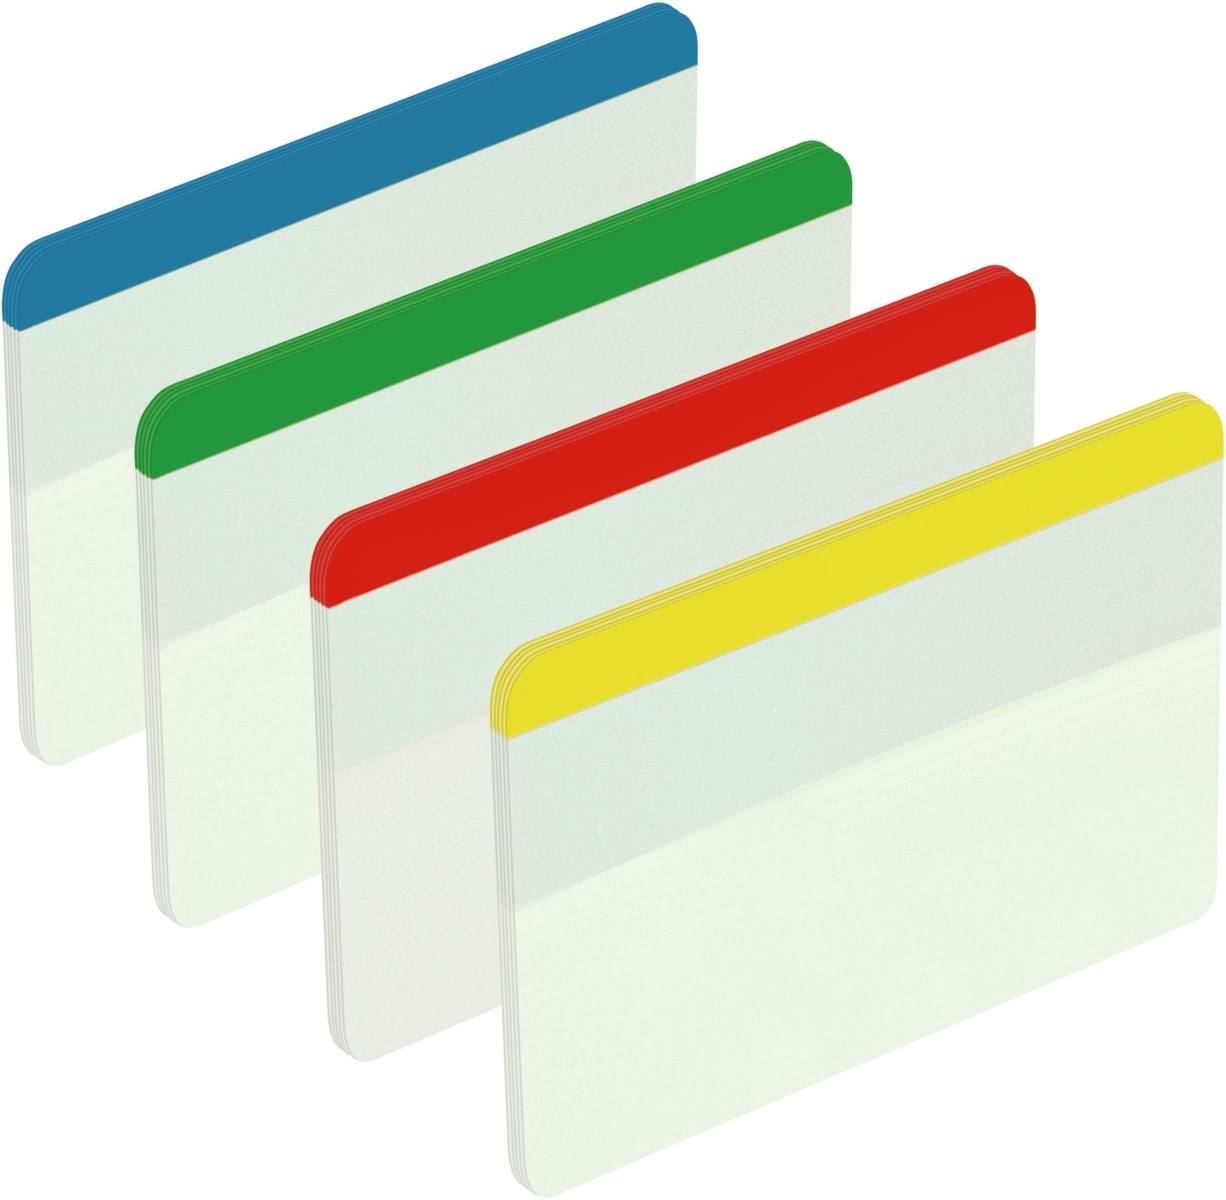 3M Post-it Index Strong 686-F1EU, 50,8 mm x 38 mm, bleu, jaune, vert, rouge, 4 x 6 bandes adhésives